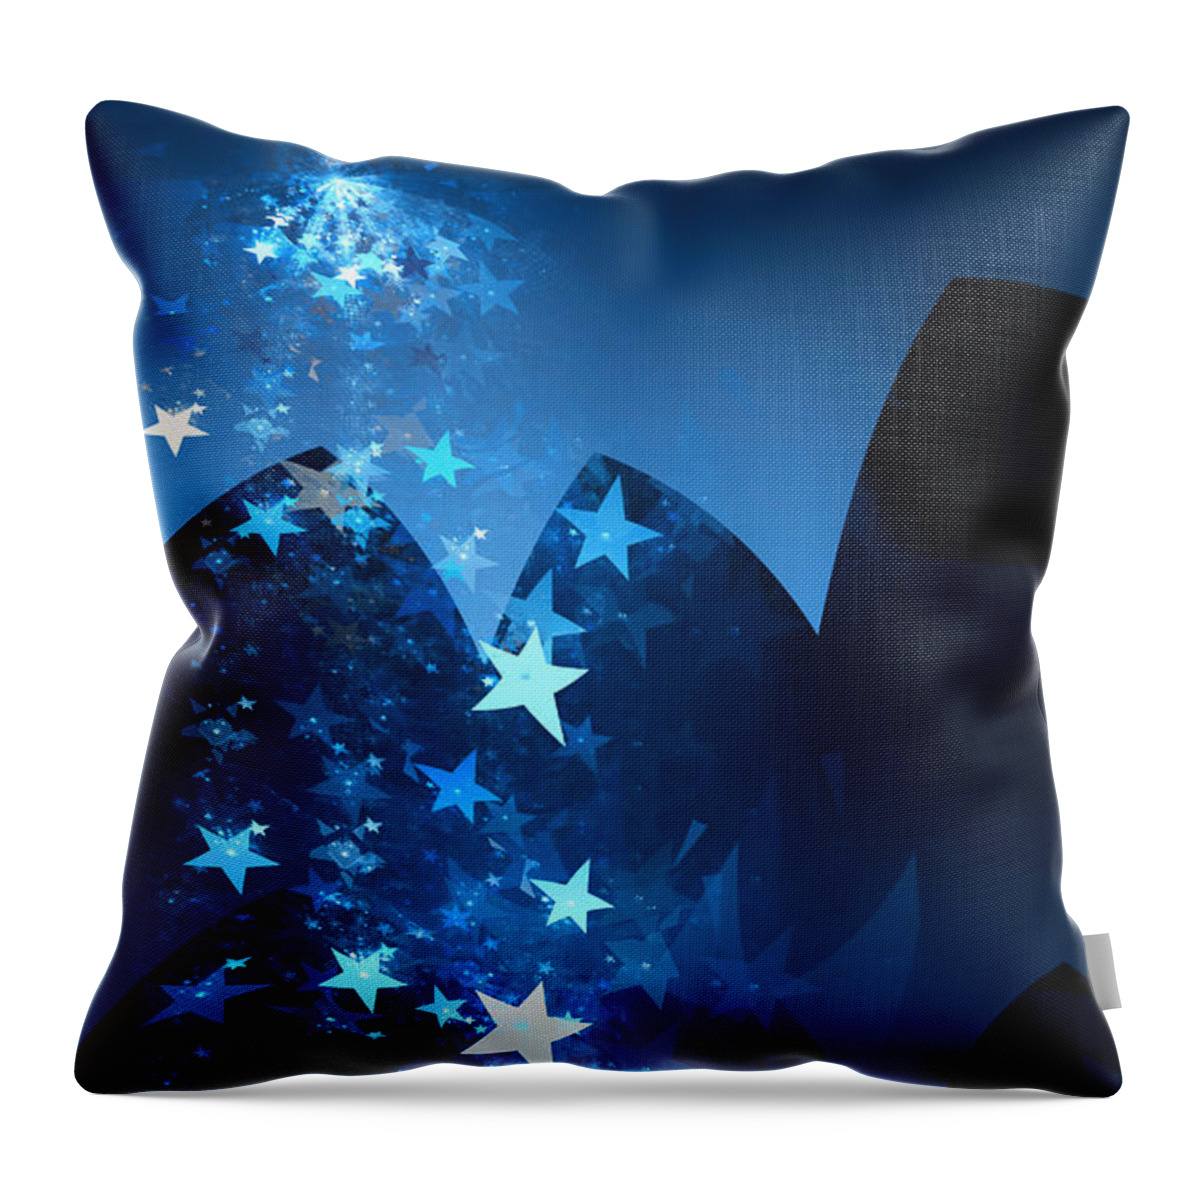 Fractal Throw Pillow featuring the digital art Starry Night by Gary Blackman